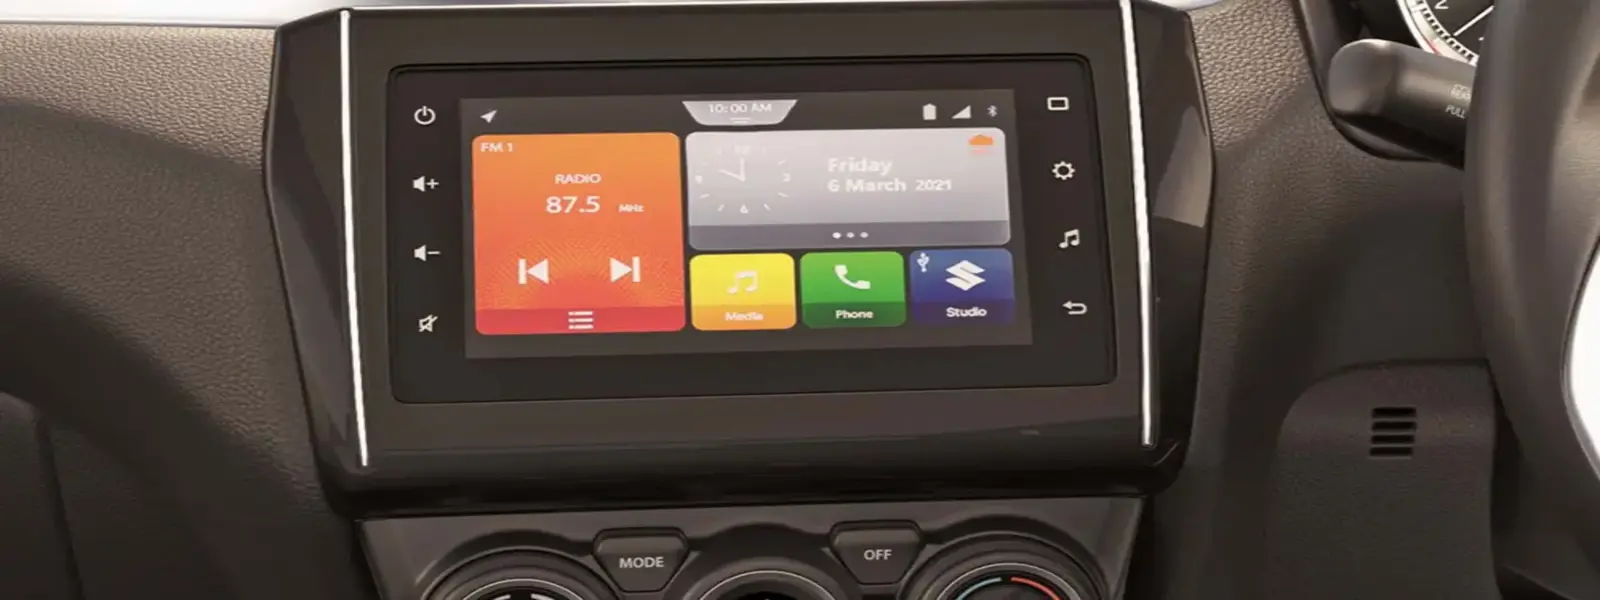 Swift- SmartPlay Infotainment System Bajrang Car World NH-37 By Pass, Nagaon